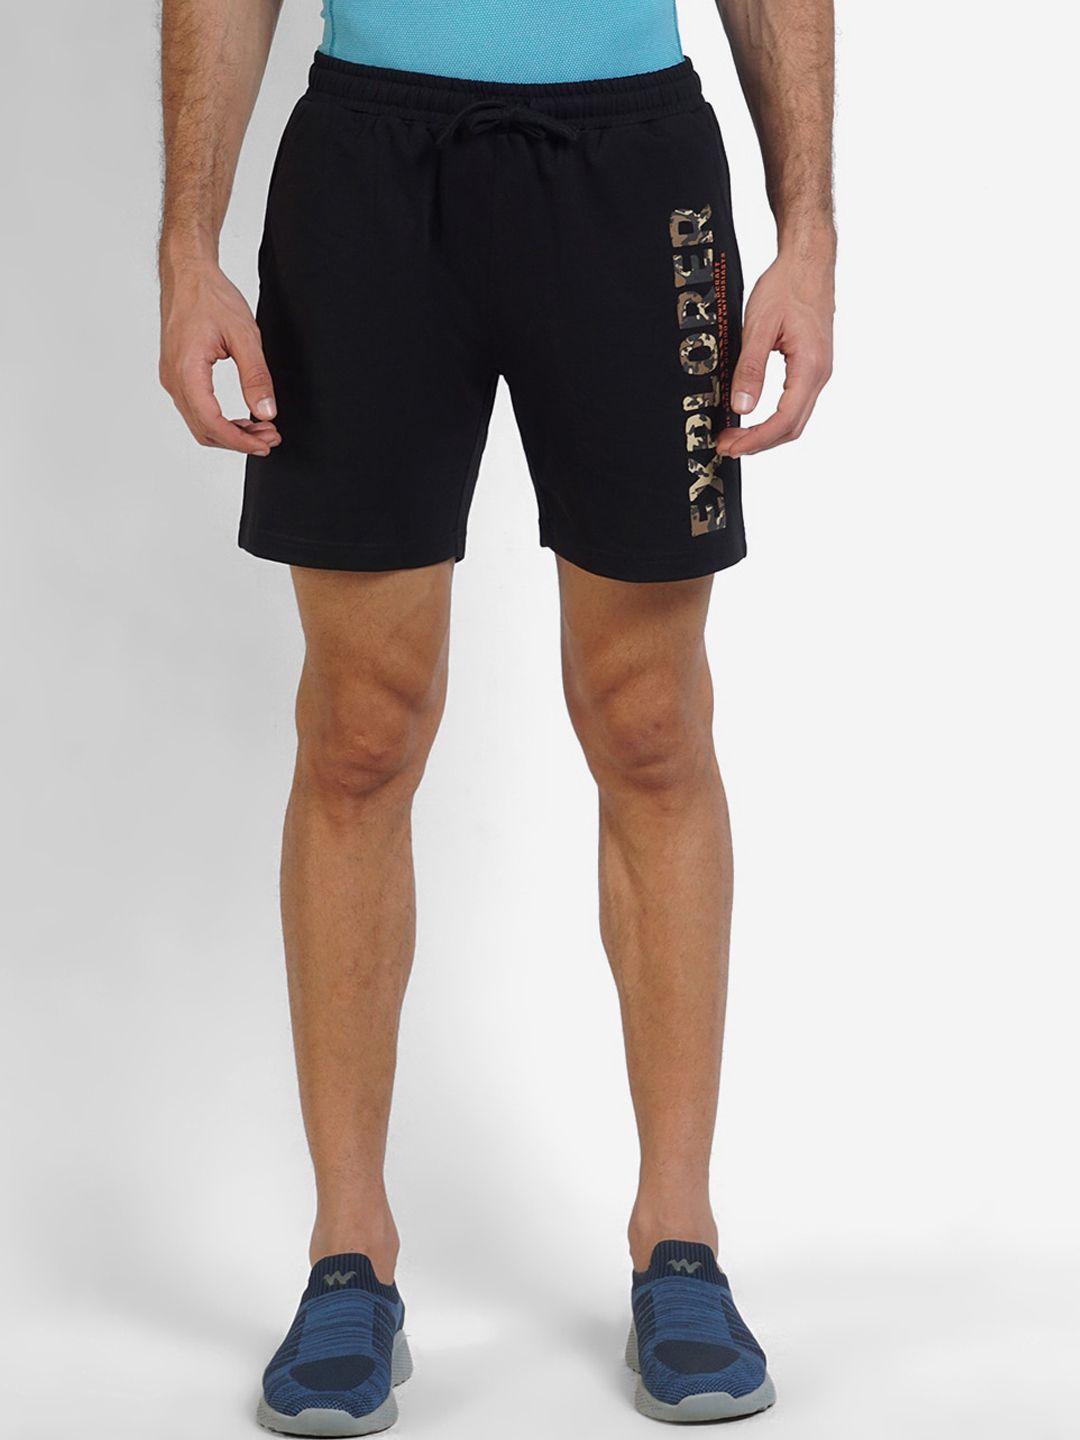 wildcraft men black sports shorts